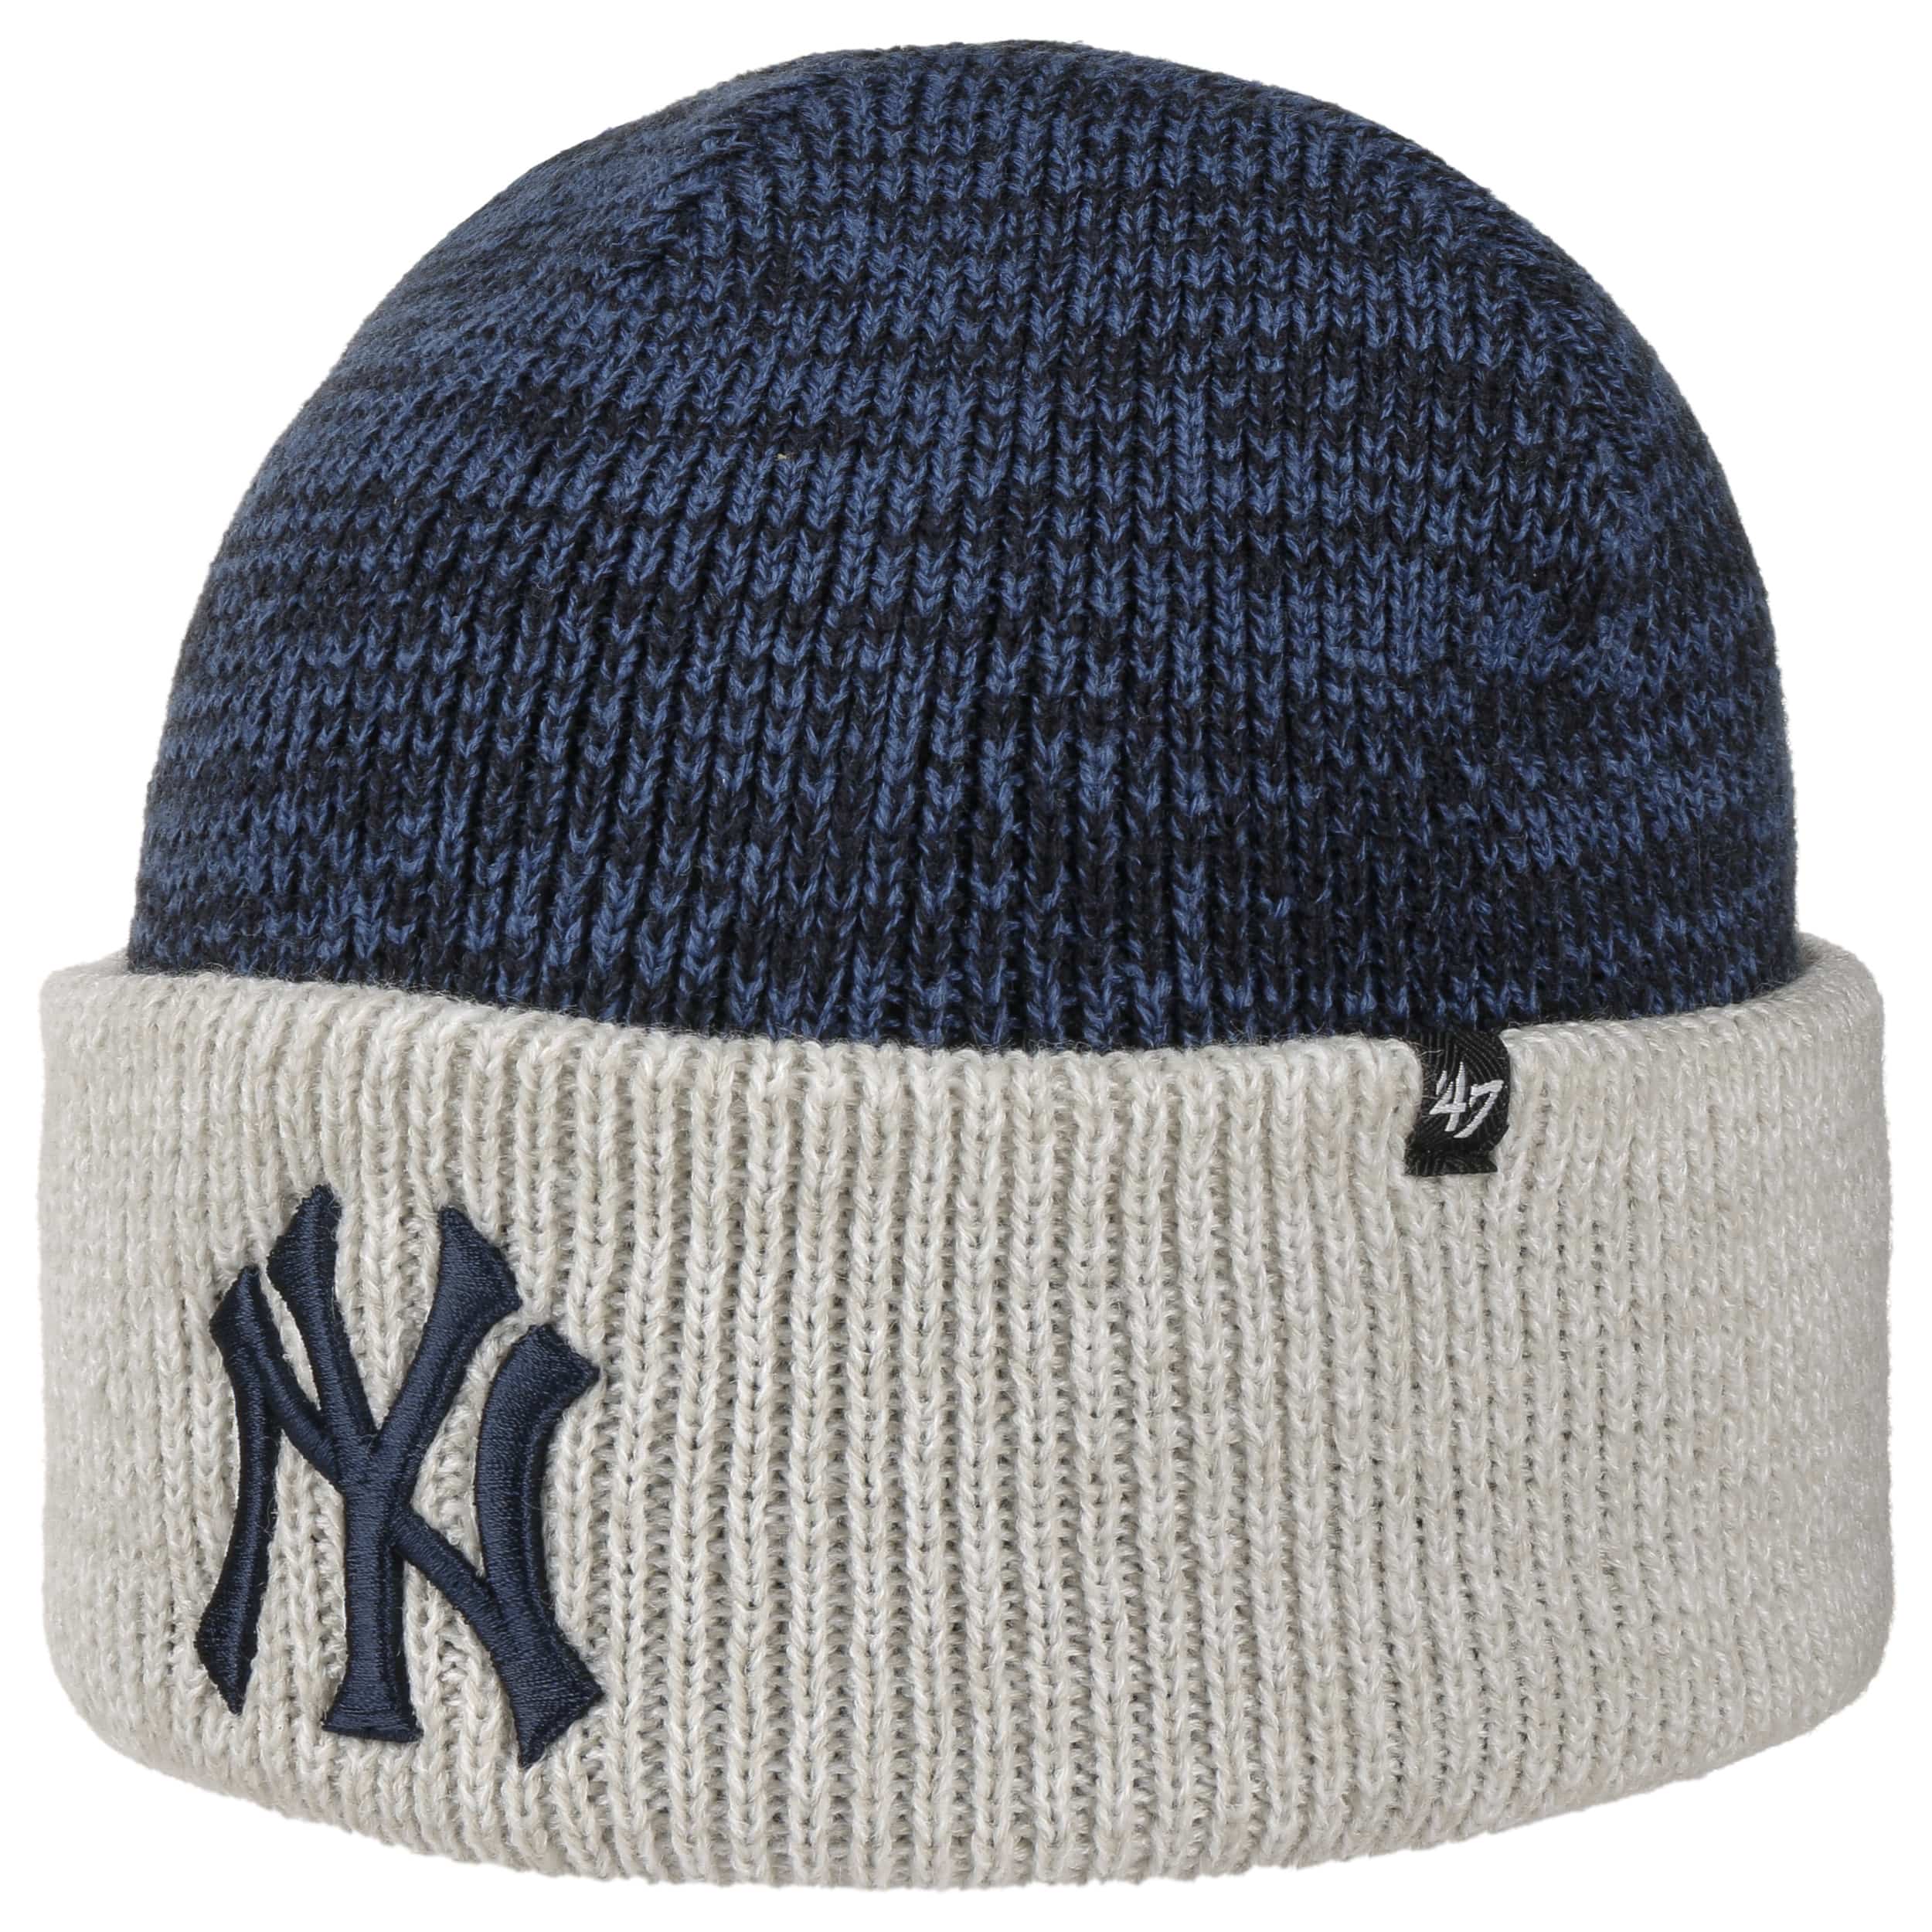 MLB Yankees Base Runner Beanie Hat by 47 Brand  2695 